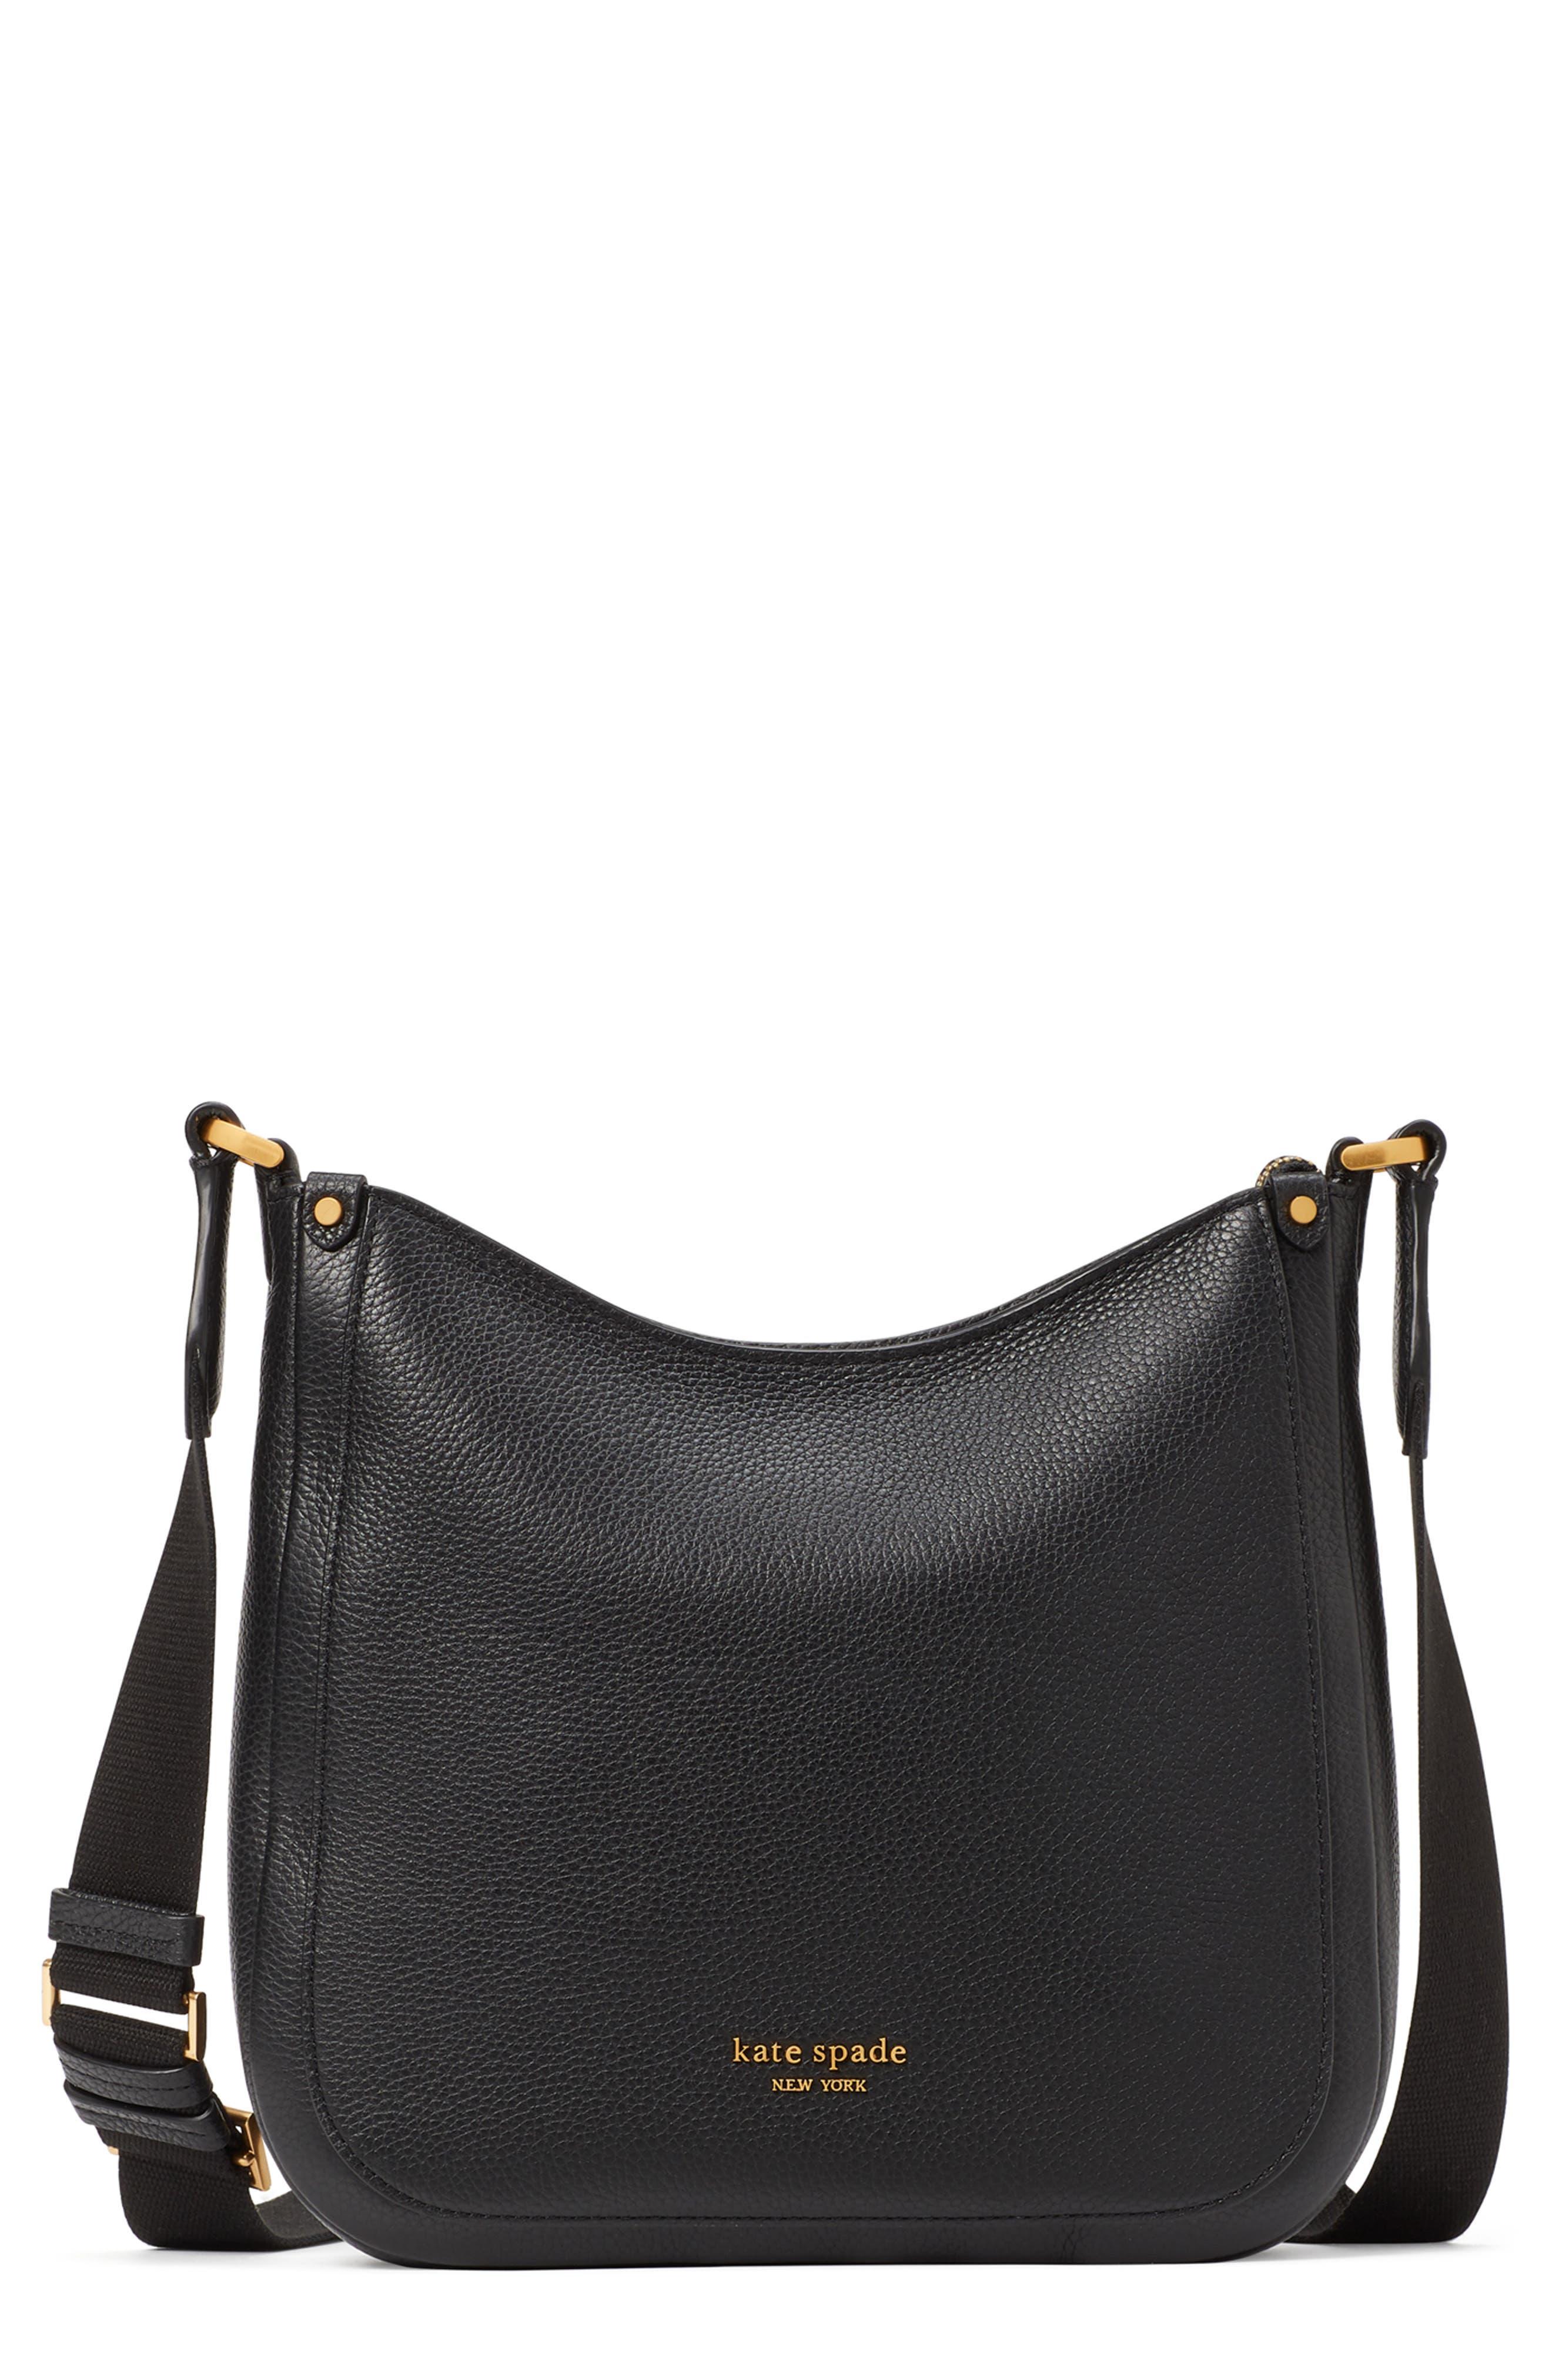 Kate Spade Medium Roulette Pebble Leather Crossbody Bag in Black